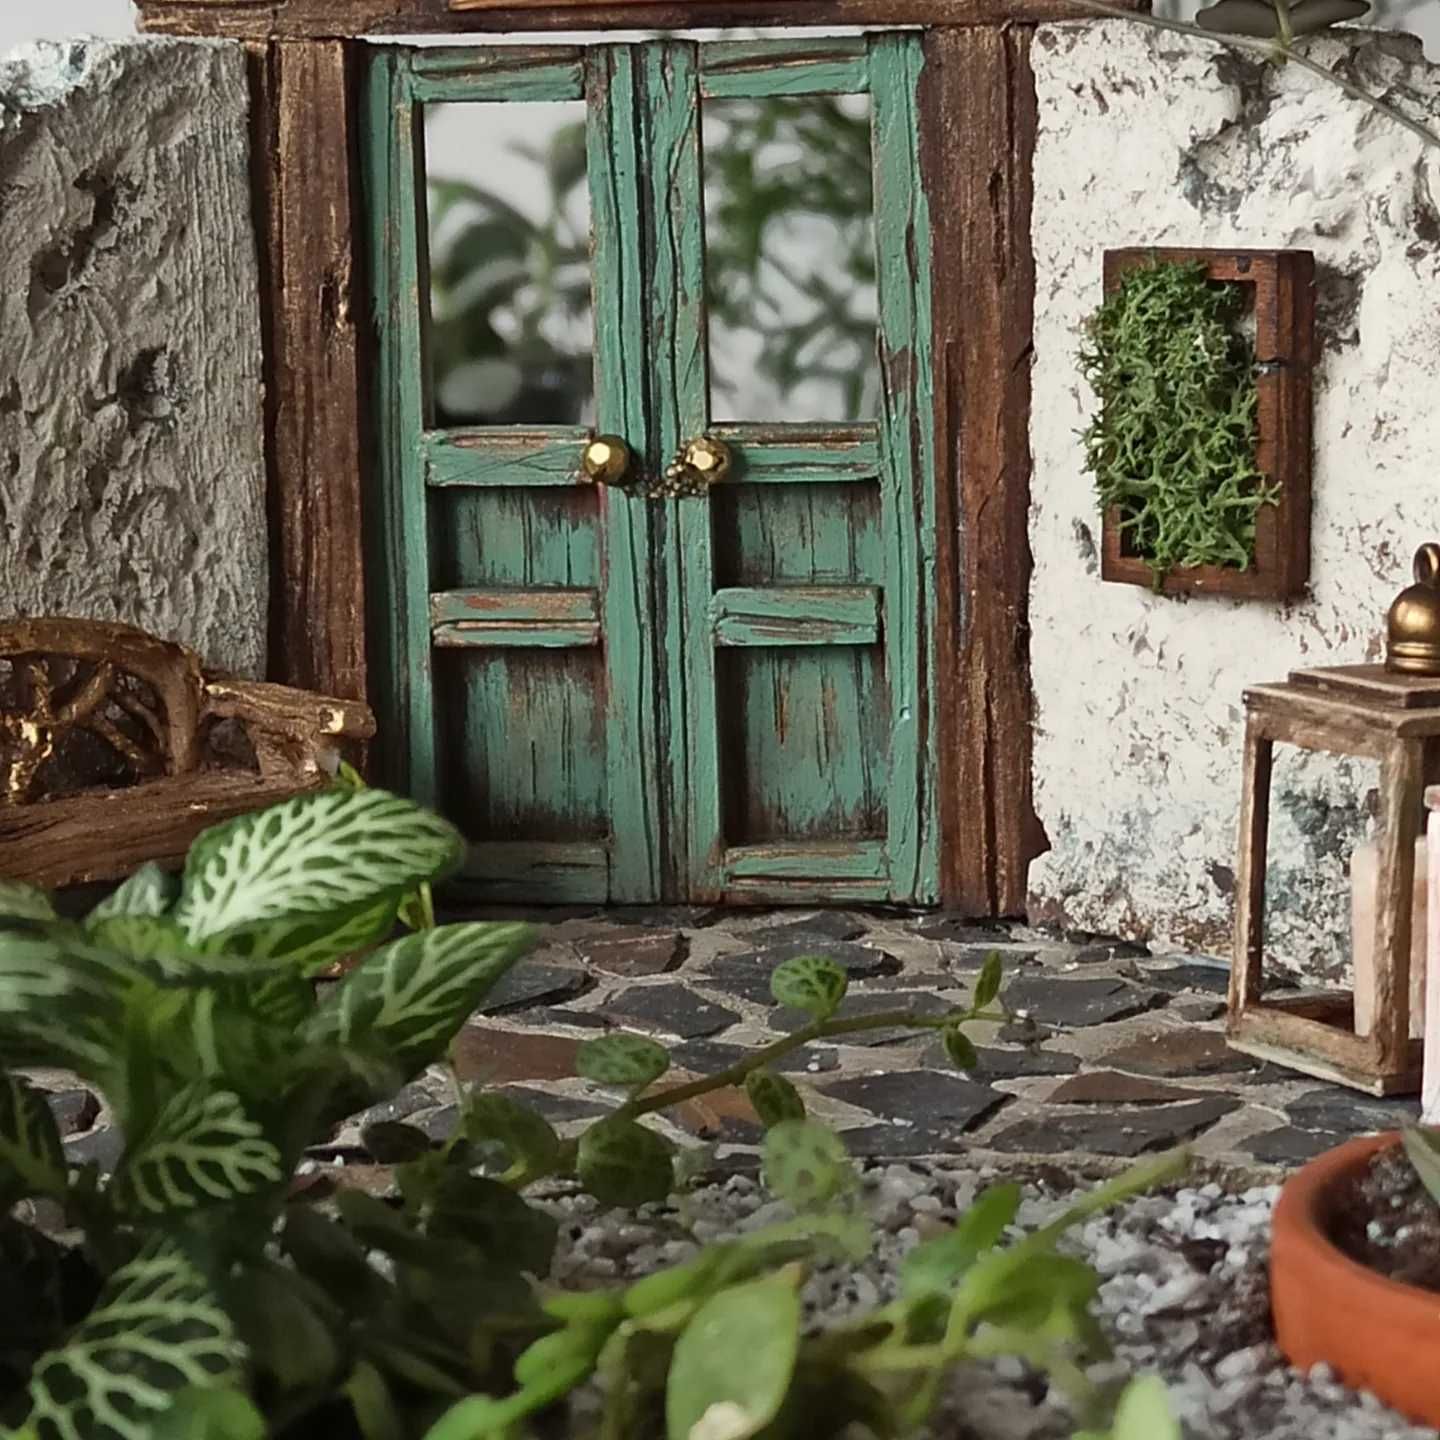 Mini ogródek w doniczce - stary ogród